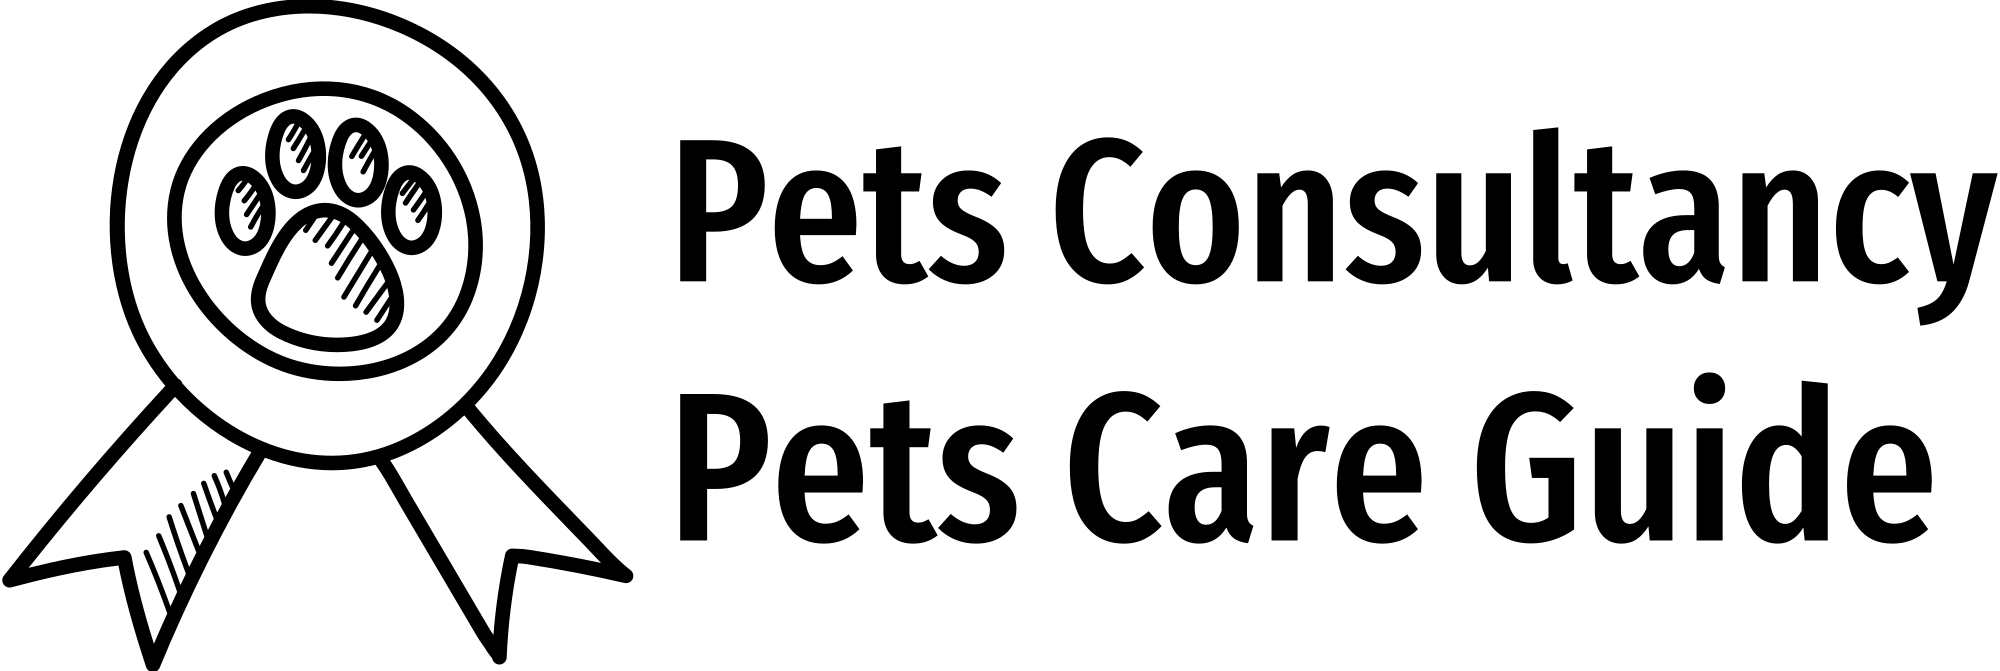 Pets Consultancy